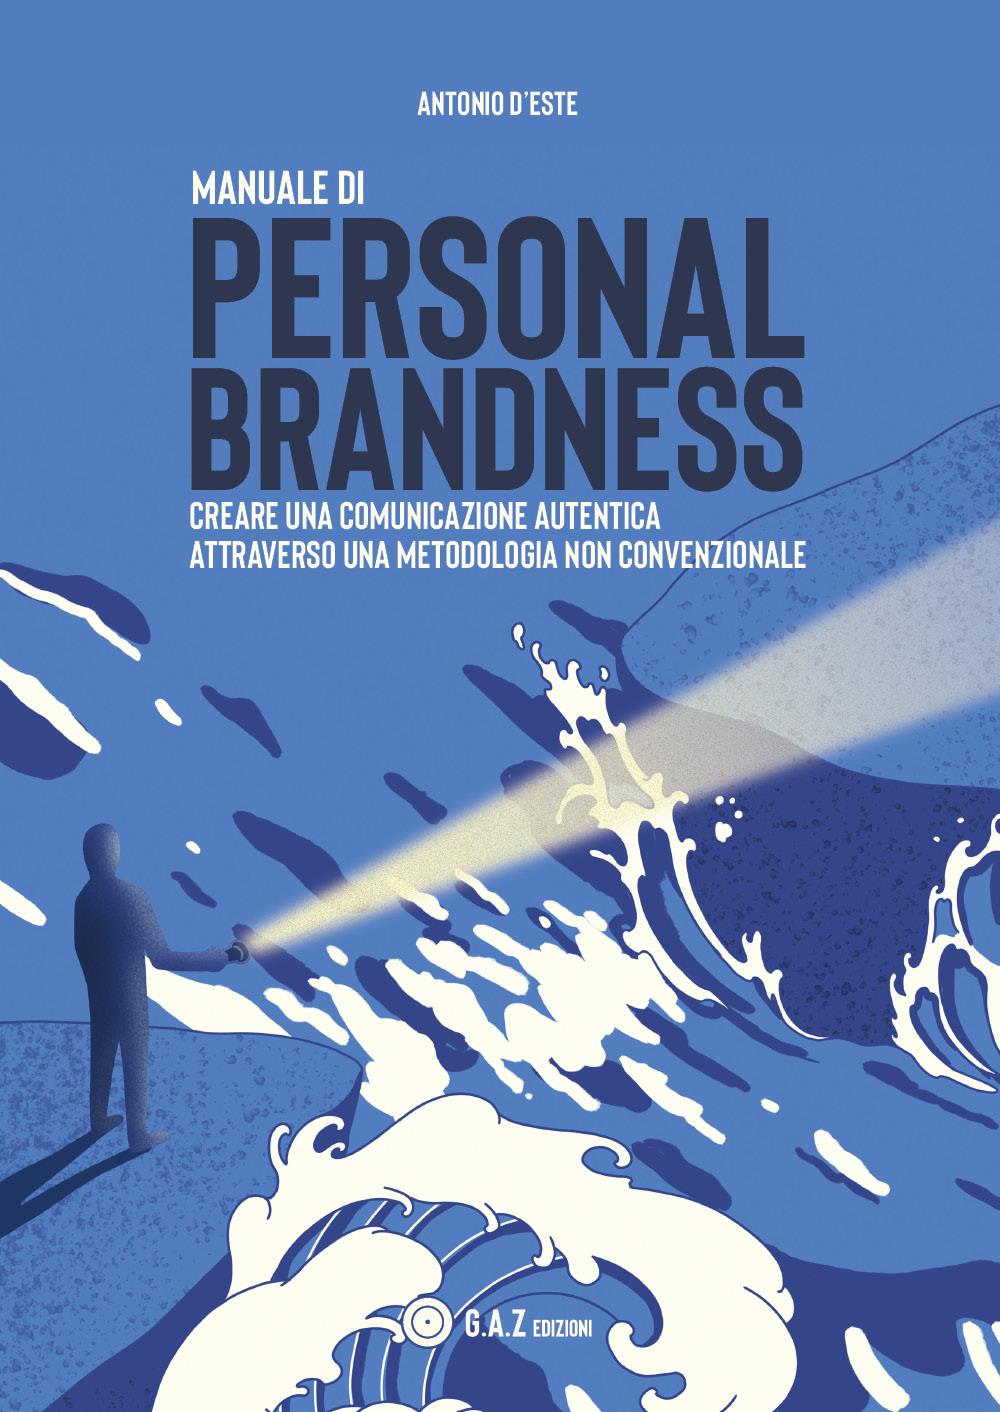 Personal brandness